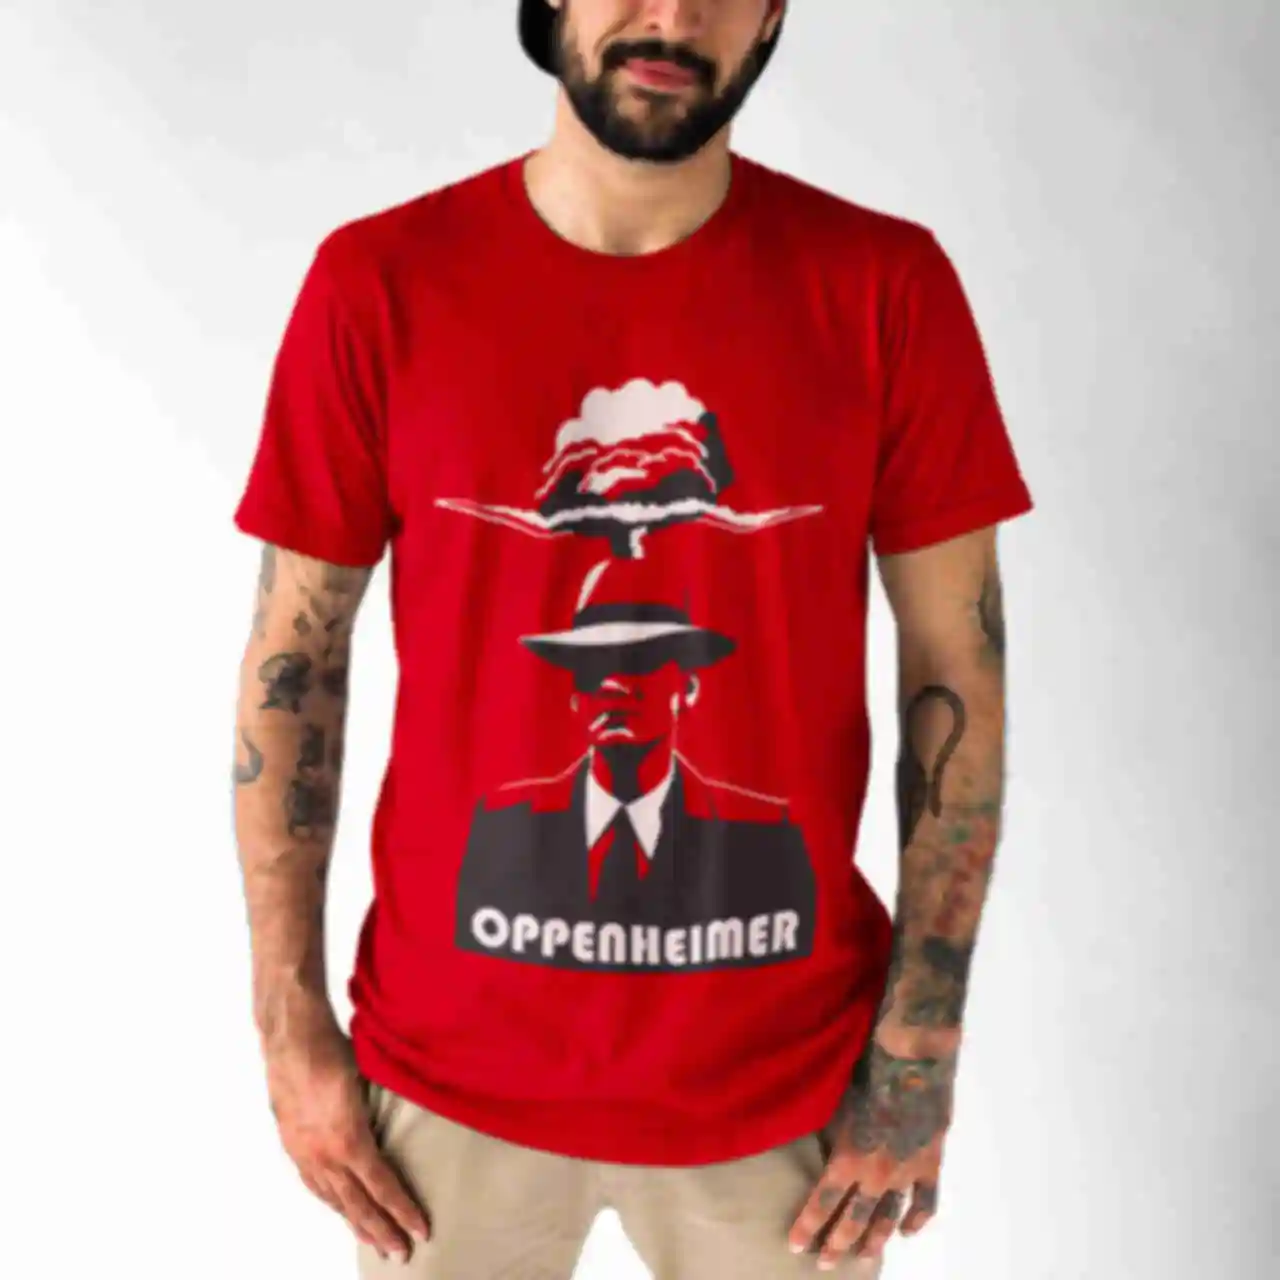 Футболка №4 • Oppenheimer ⦁ Мерч Оппенгеймер ⦁ Одежда в стиле фильма с Киллианом Мёрфи. Фото №1